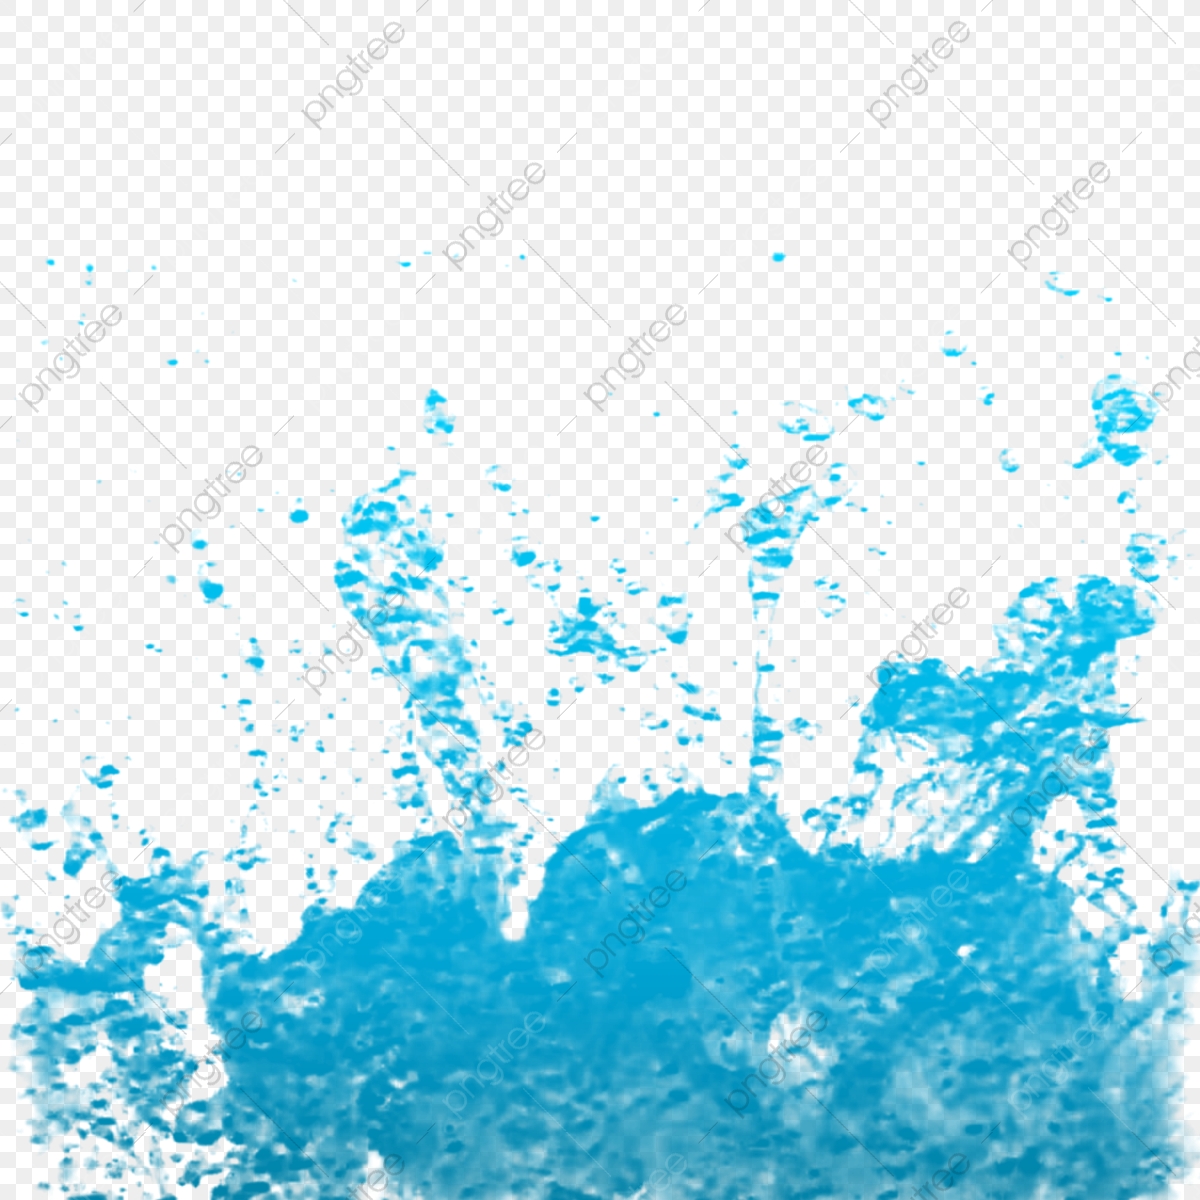 Blue Water Splash Clipart, Water Drop Vector Background, Sea.